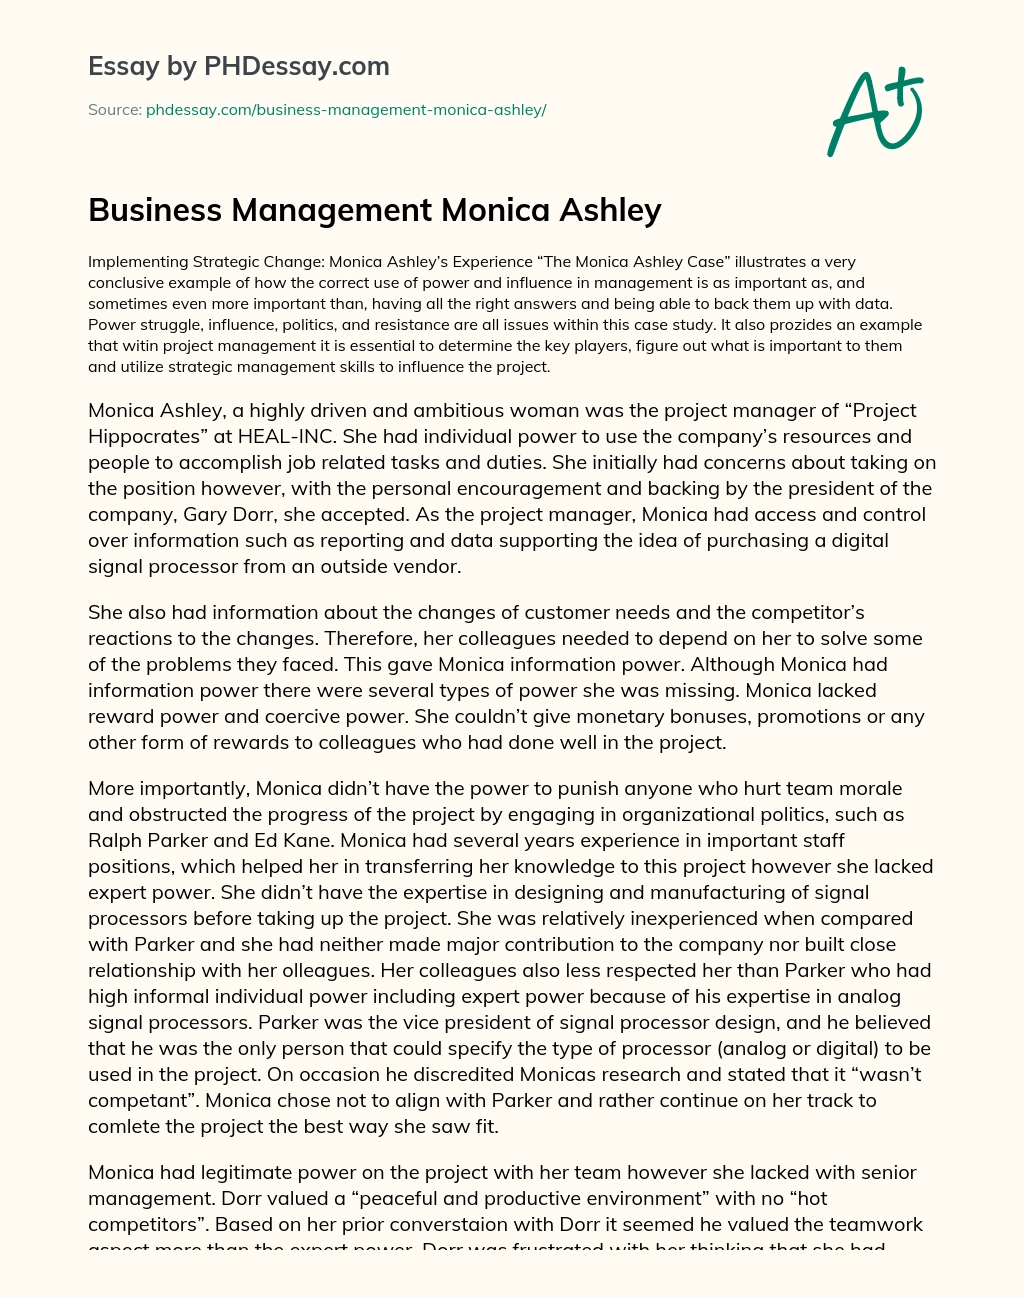 Business Management Monica Ashley essay